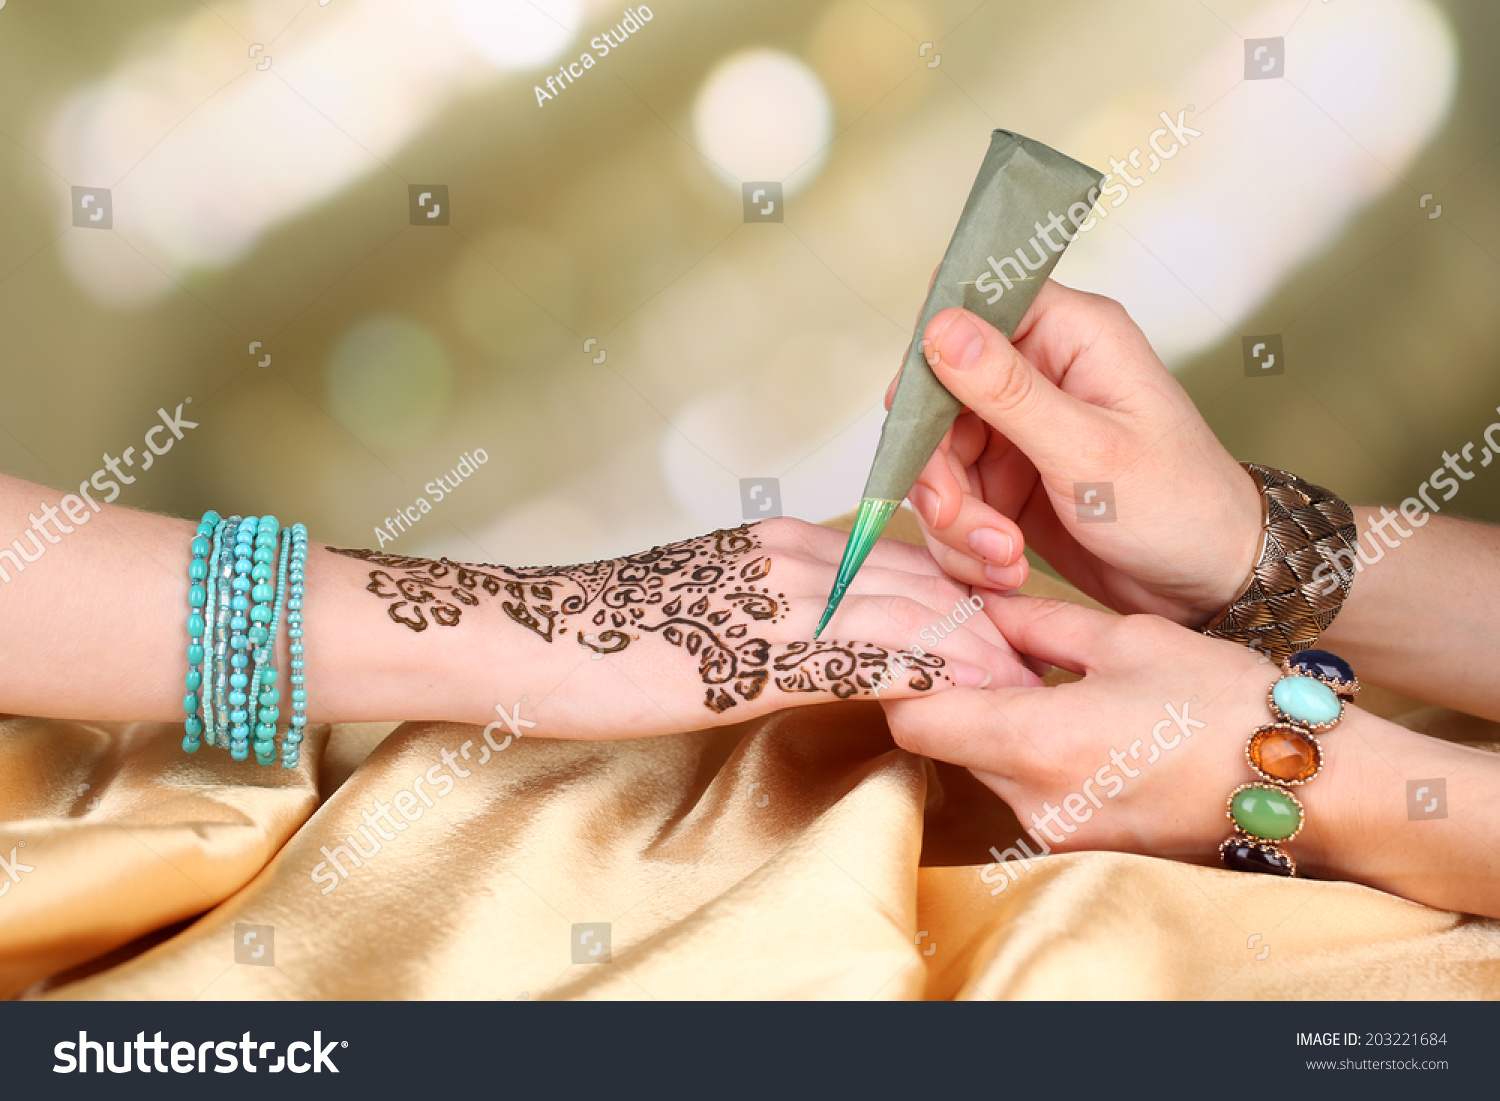 Process of applying Mehndi on female hand, close up #203221684